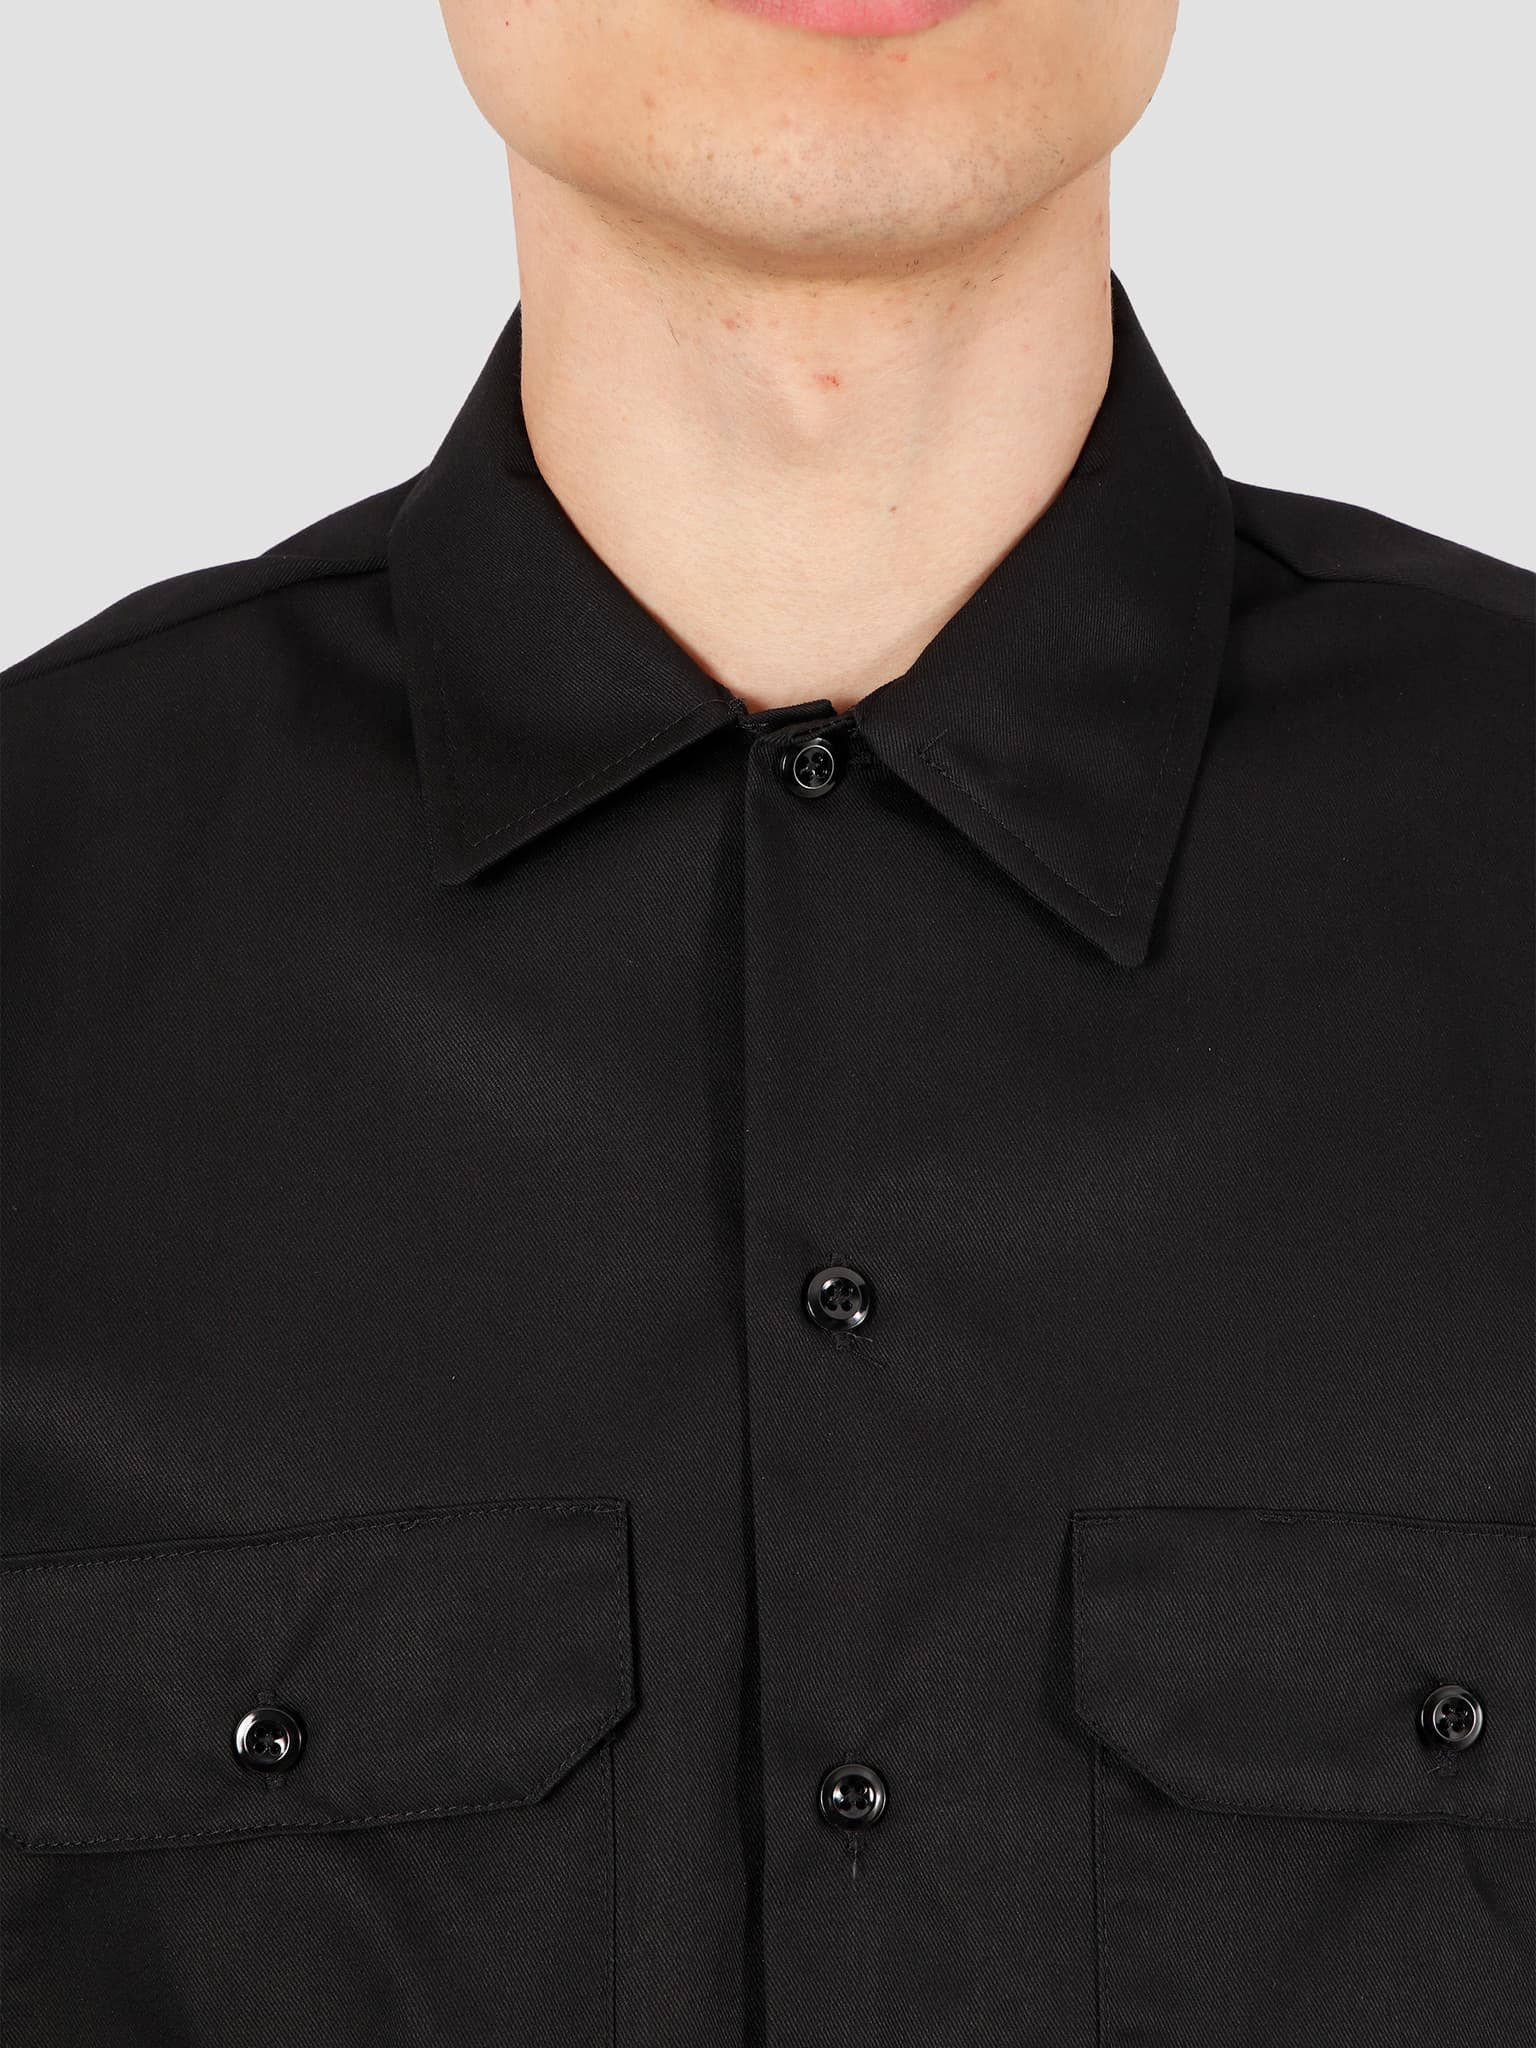 Short Sleeve Work Shirt Black DK001574BLK1